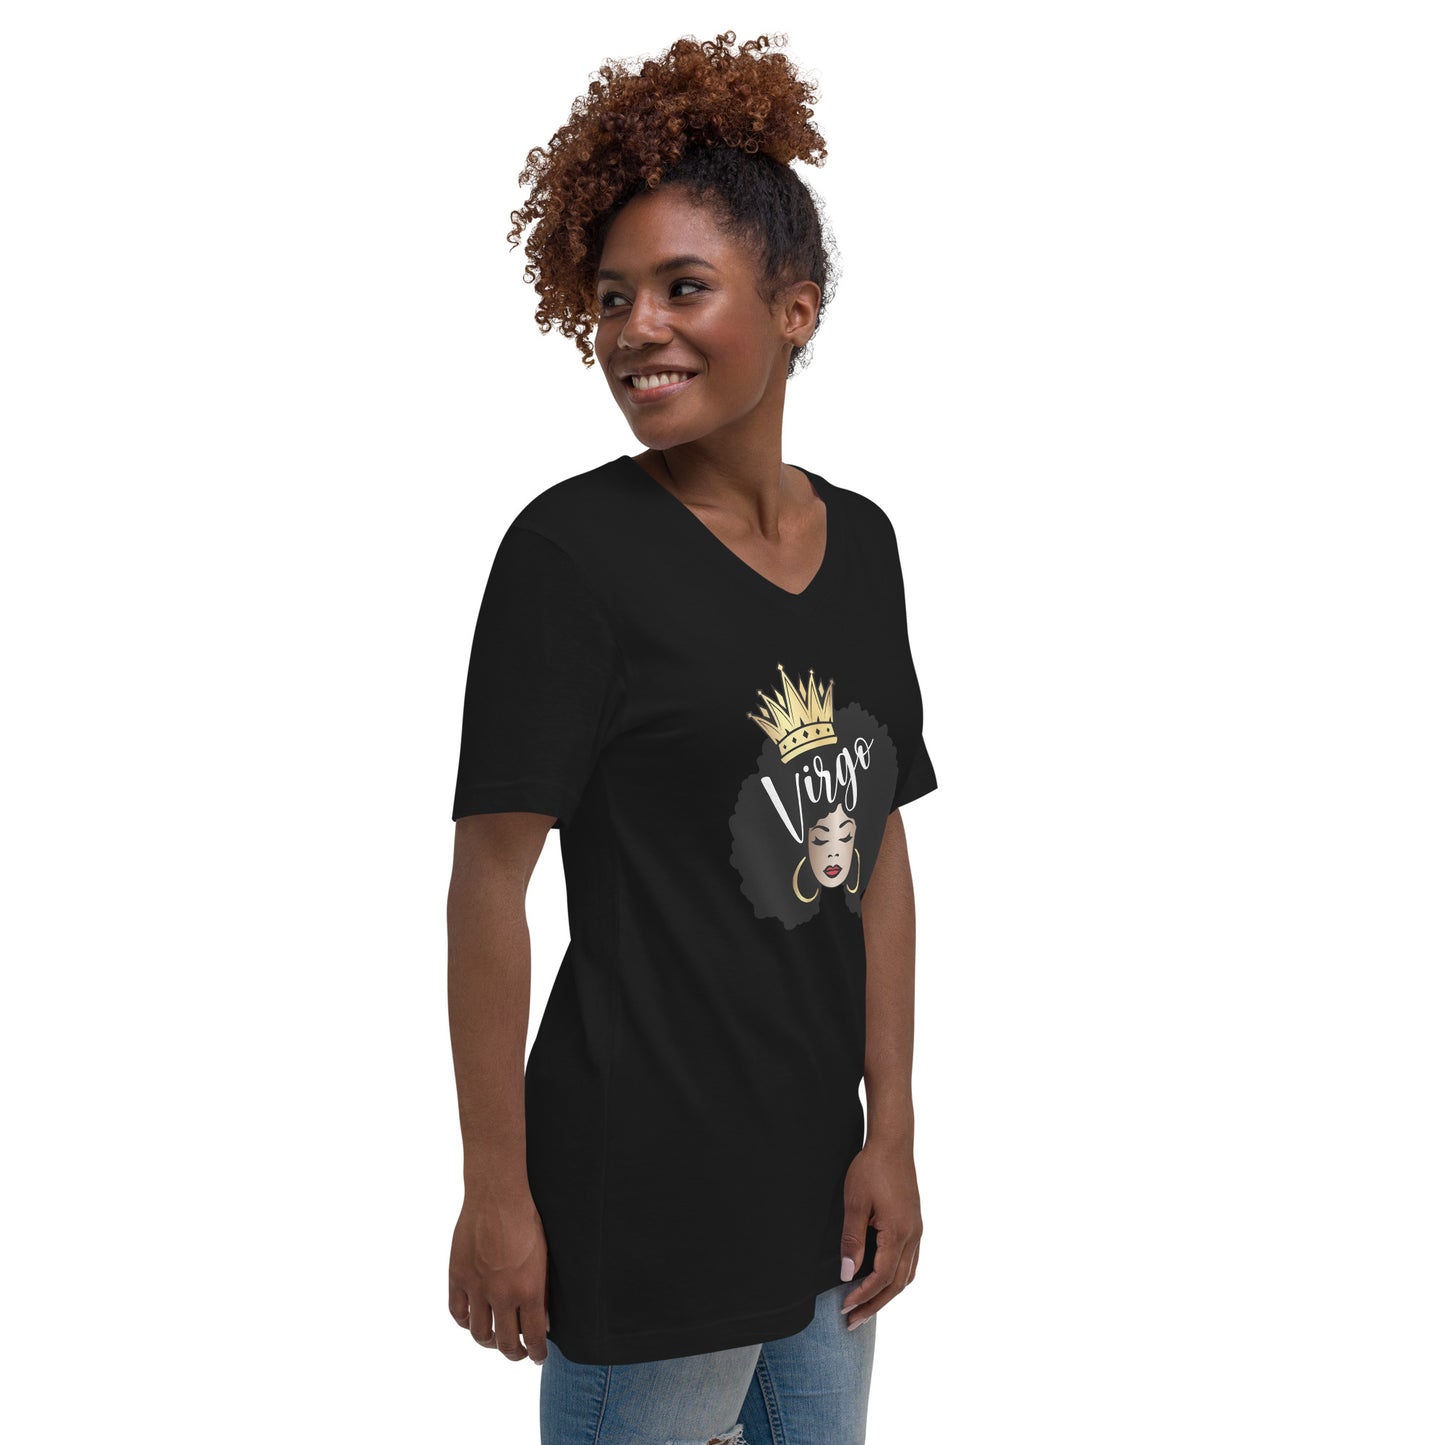 Women's Short Sleeve V-Neck T-Shirt - Virgo Afro Queen